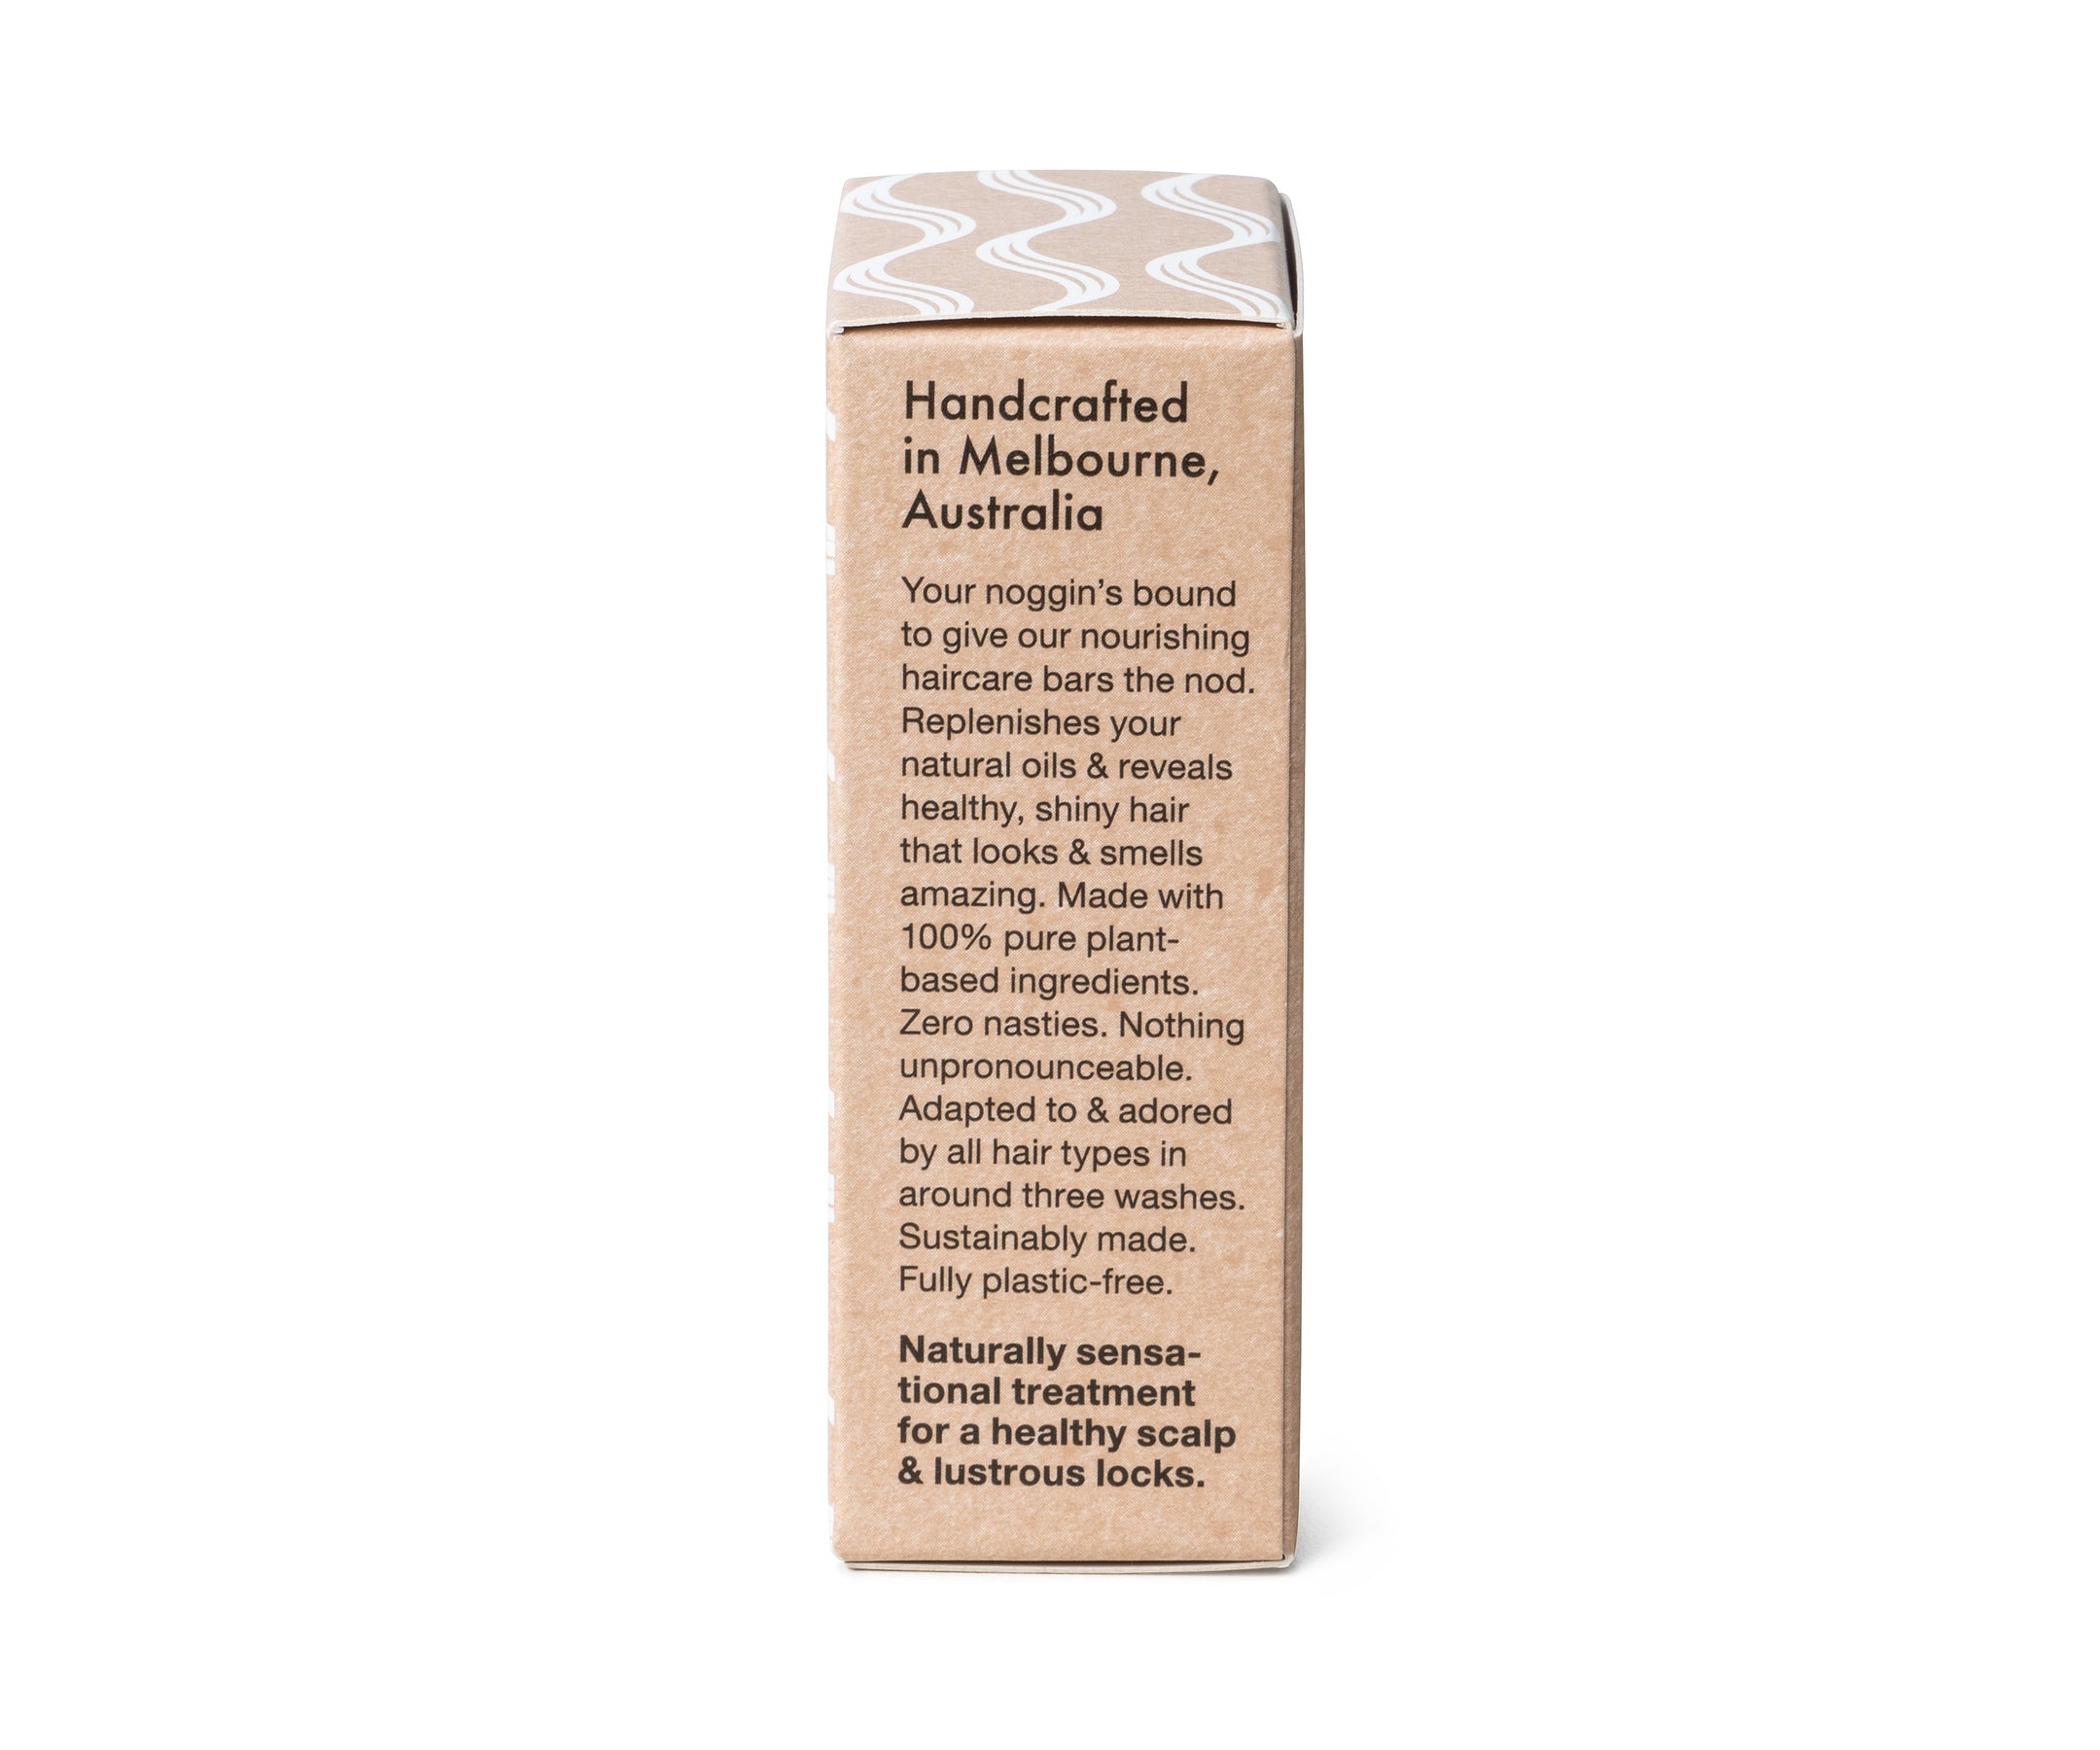 Australian Natural Soap Company conditioning shampoo bar right side of box